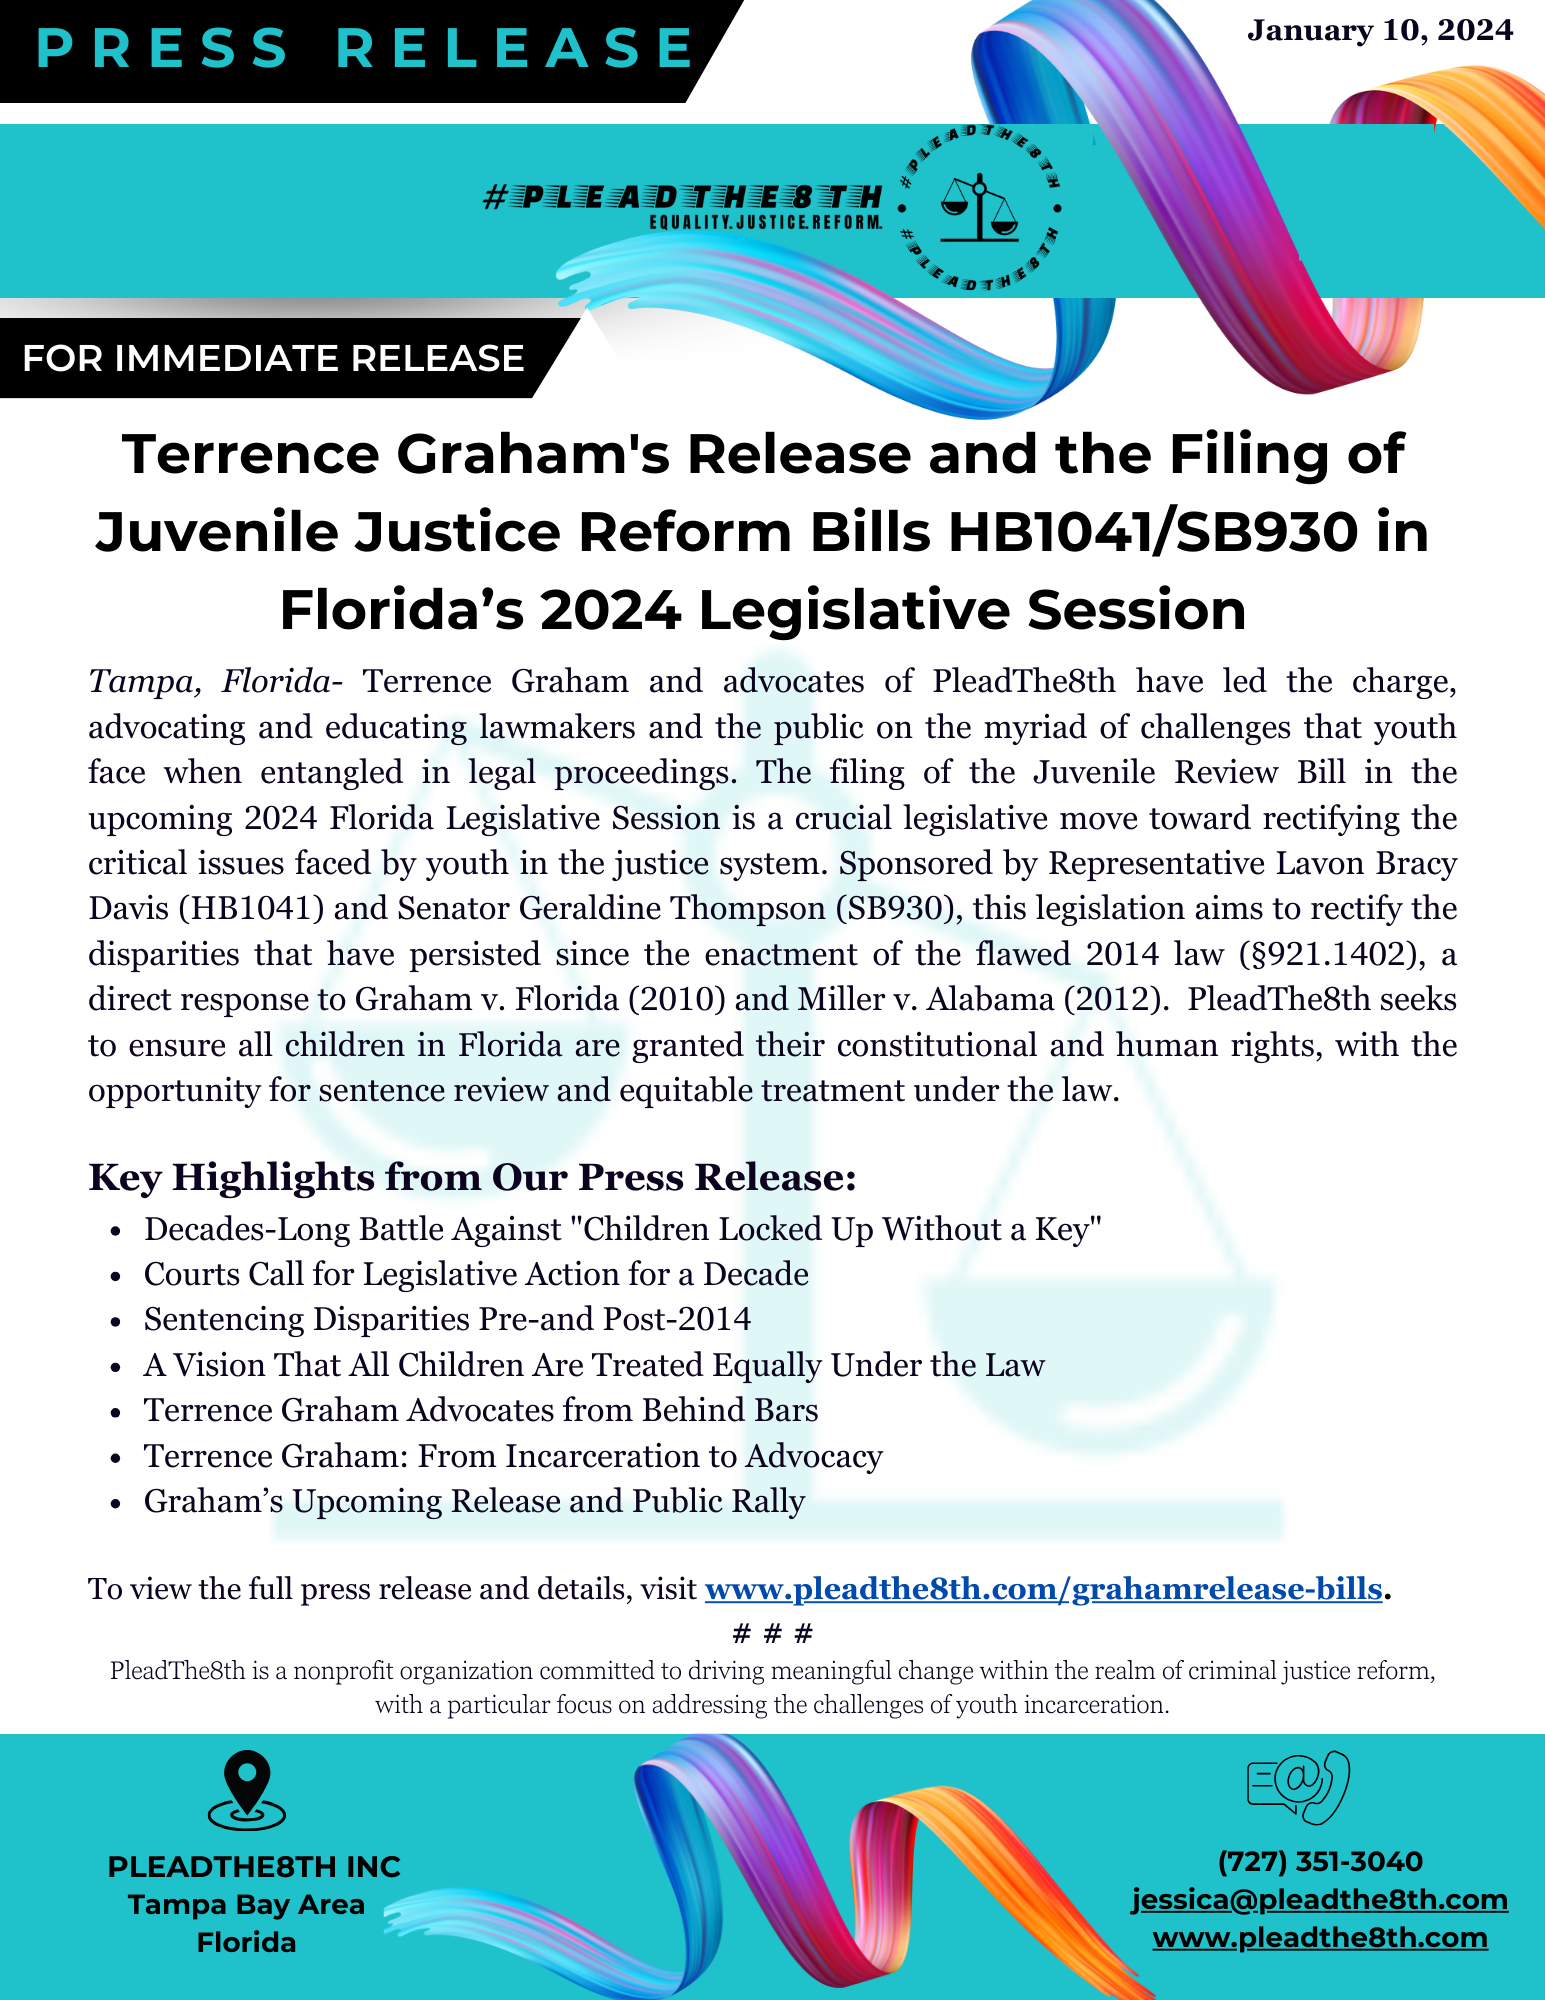 Terrence Graham's Release and Florida Juvenile Justice Reform Bills HB1041 & SB930